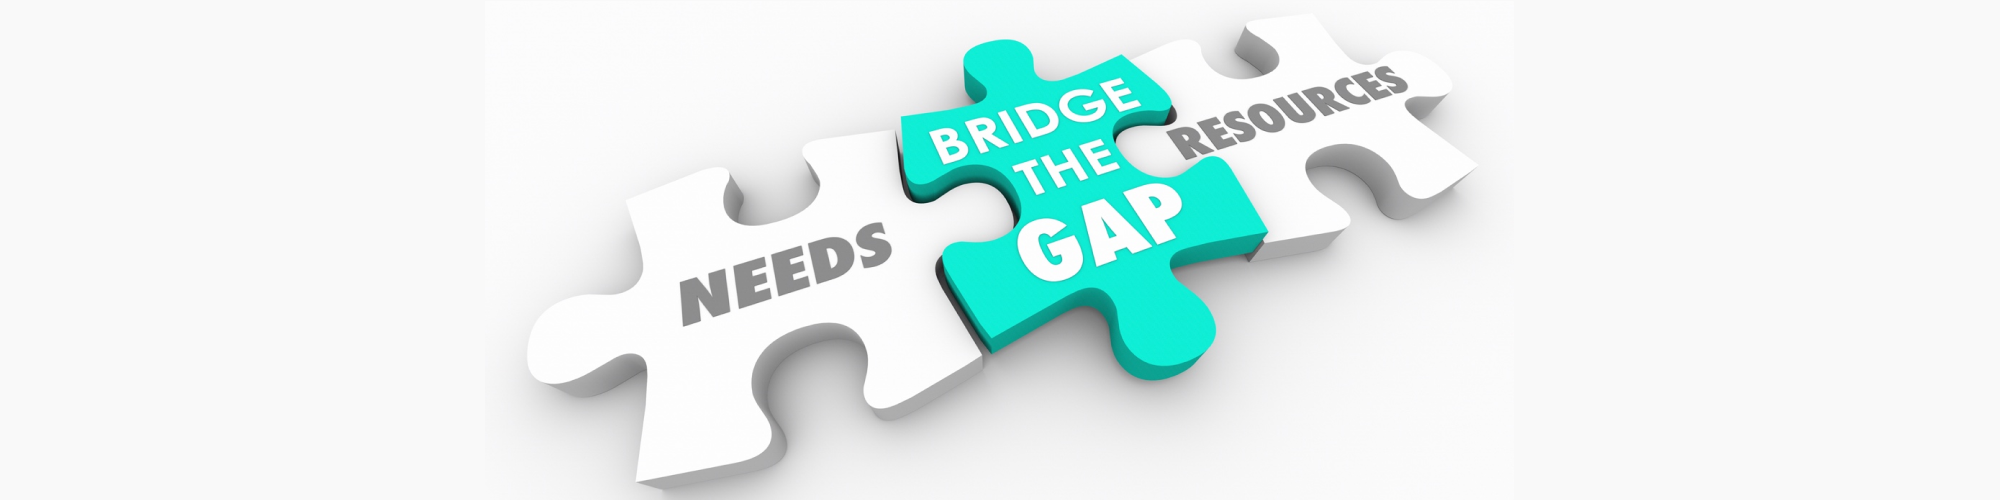 Bridge the Gap